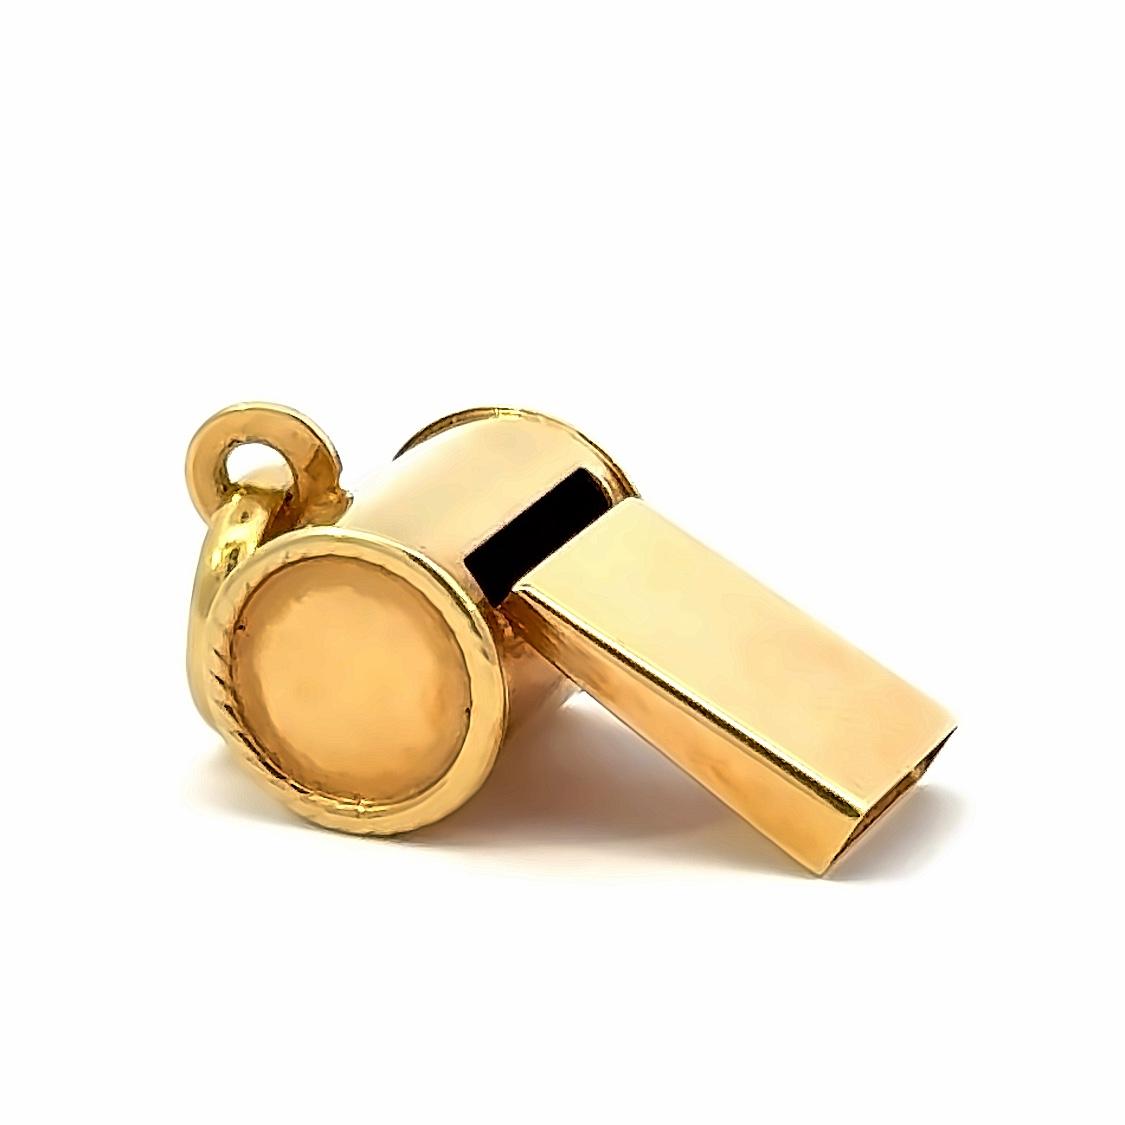 Vintage 14k Gold Whistle Charm